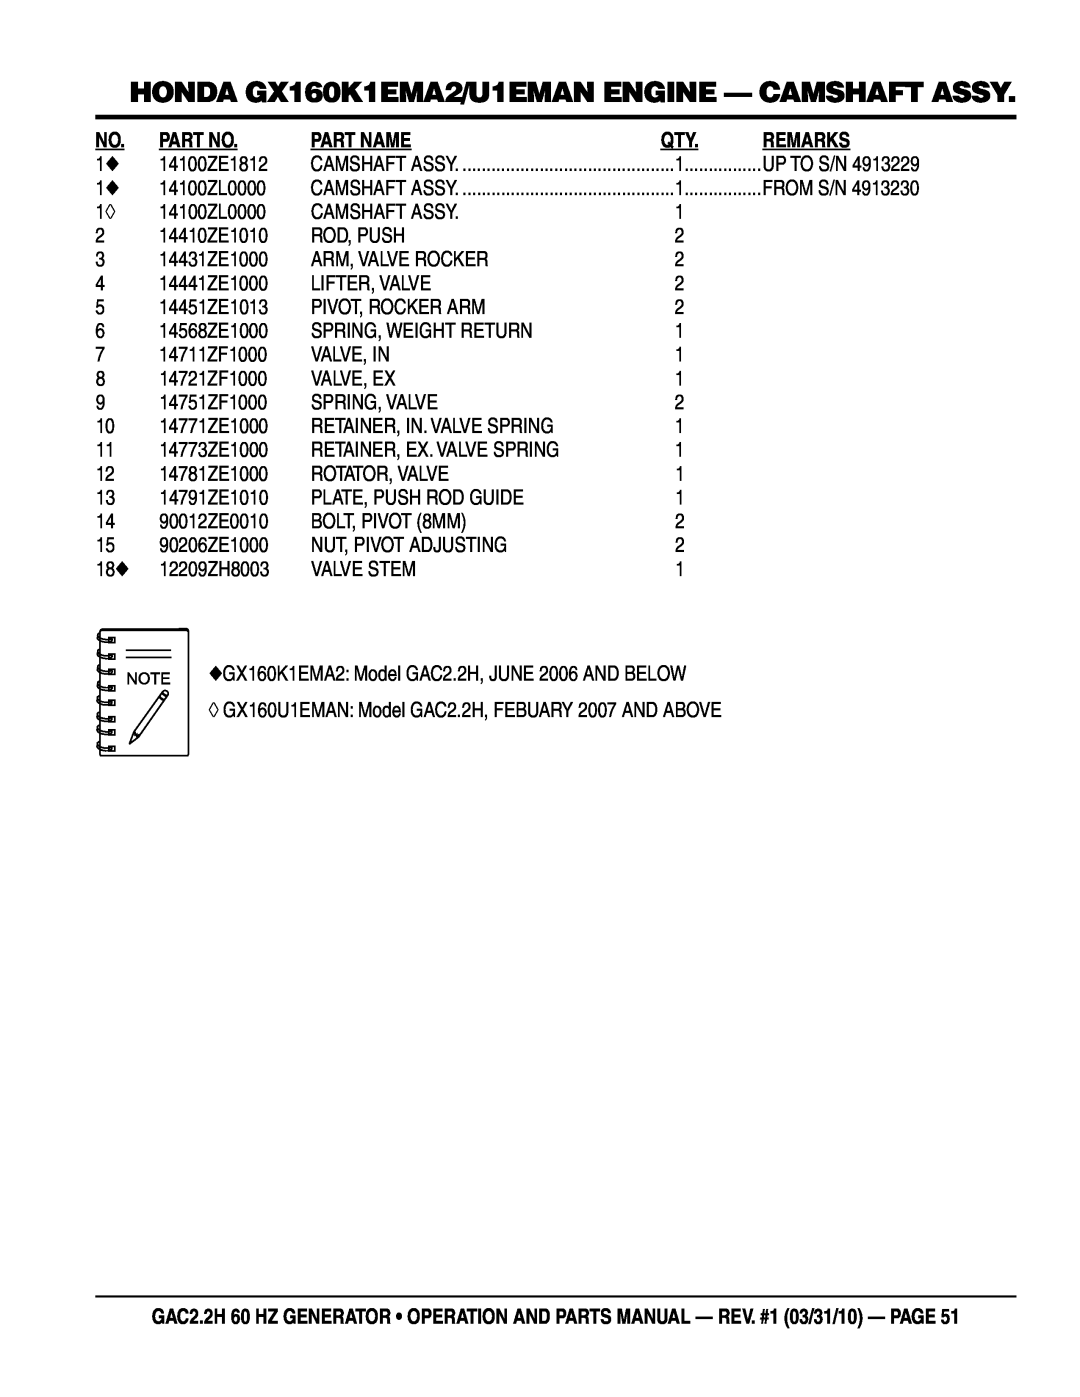 Multiquip GAC2.2H manual HONDA GX160K1EMA2/U1EMAN engine - cAMshaft assy, Part Name, Remarks, 14100ZE1812 